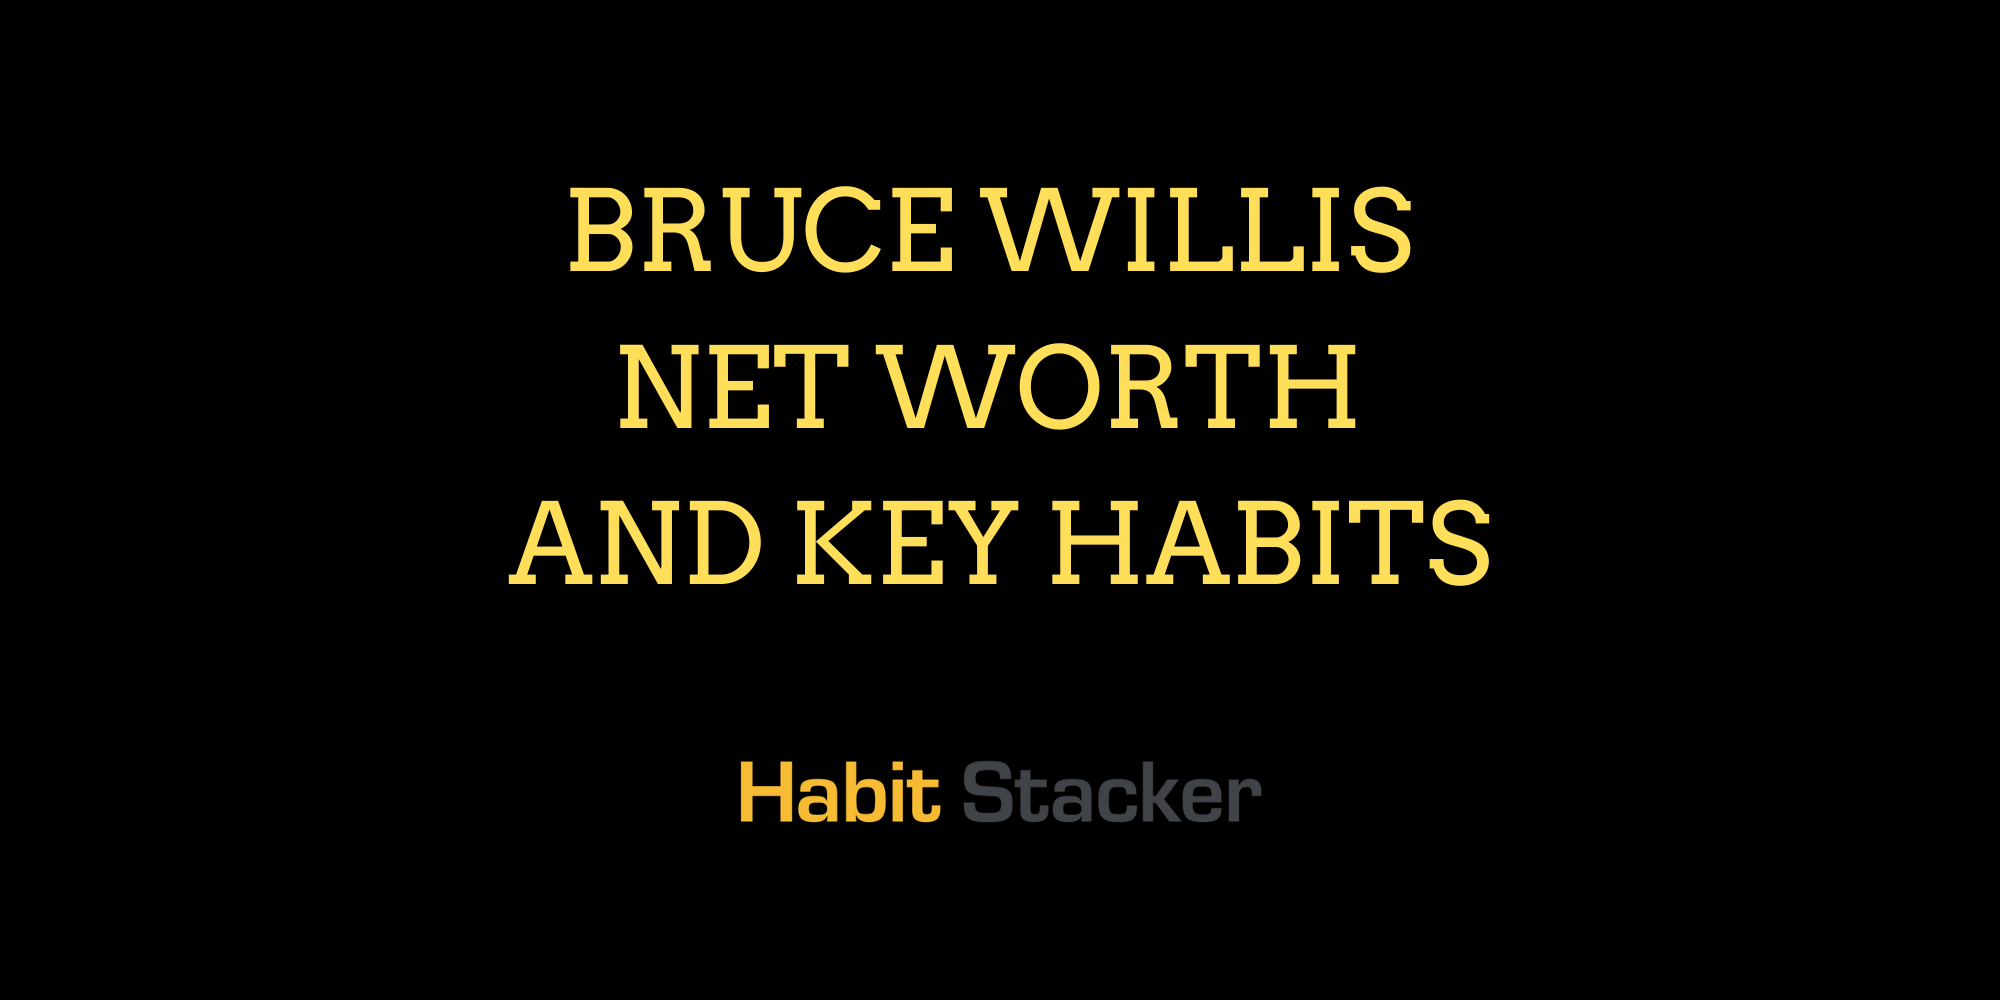 Bruce Willis Net Worth and Key Habits